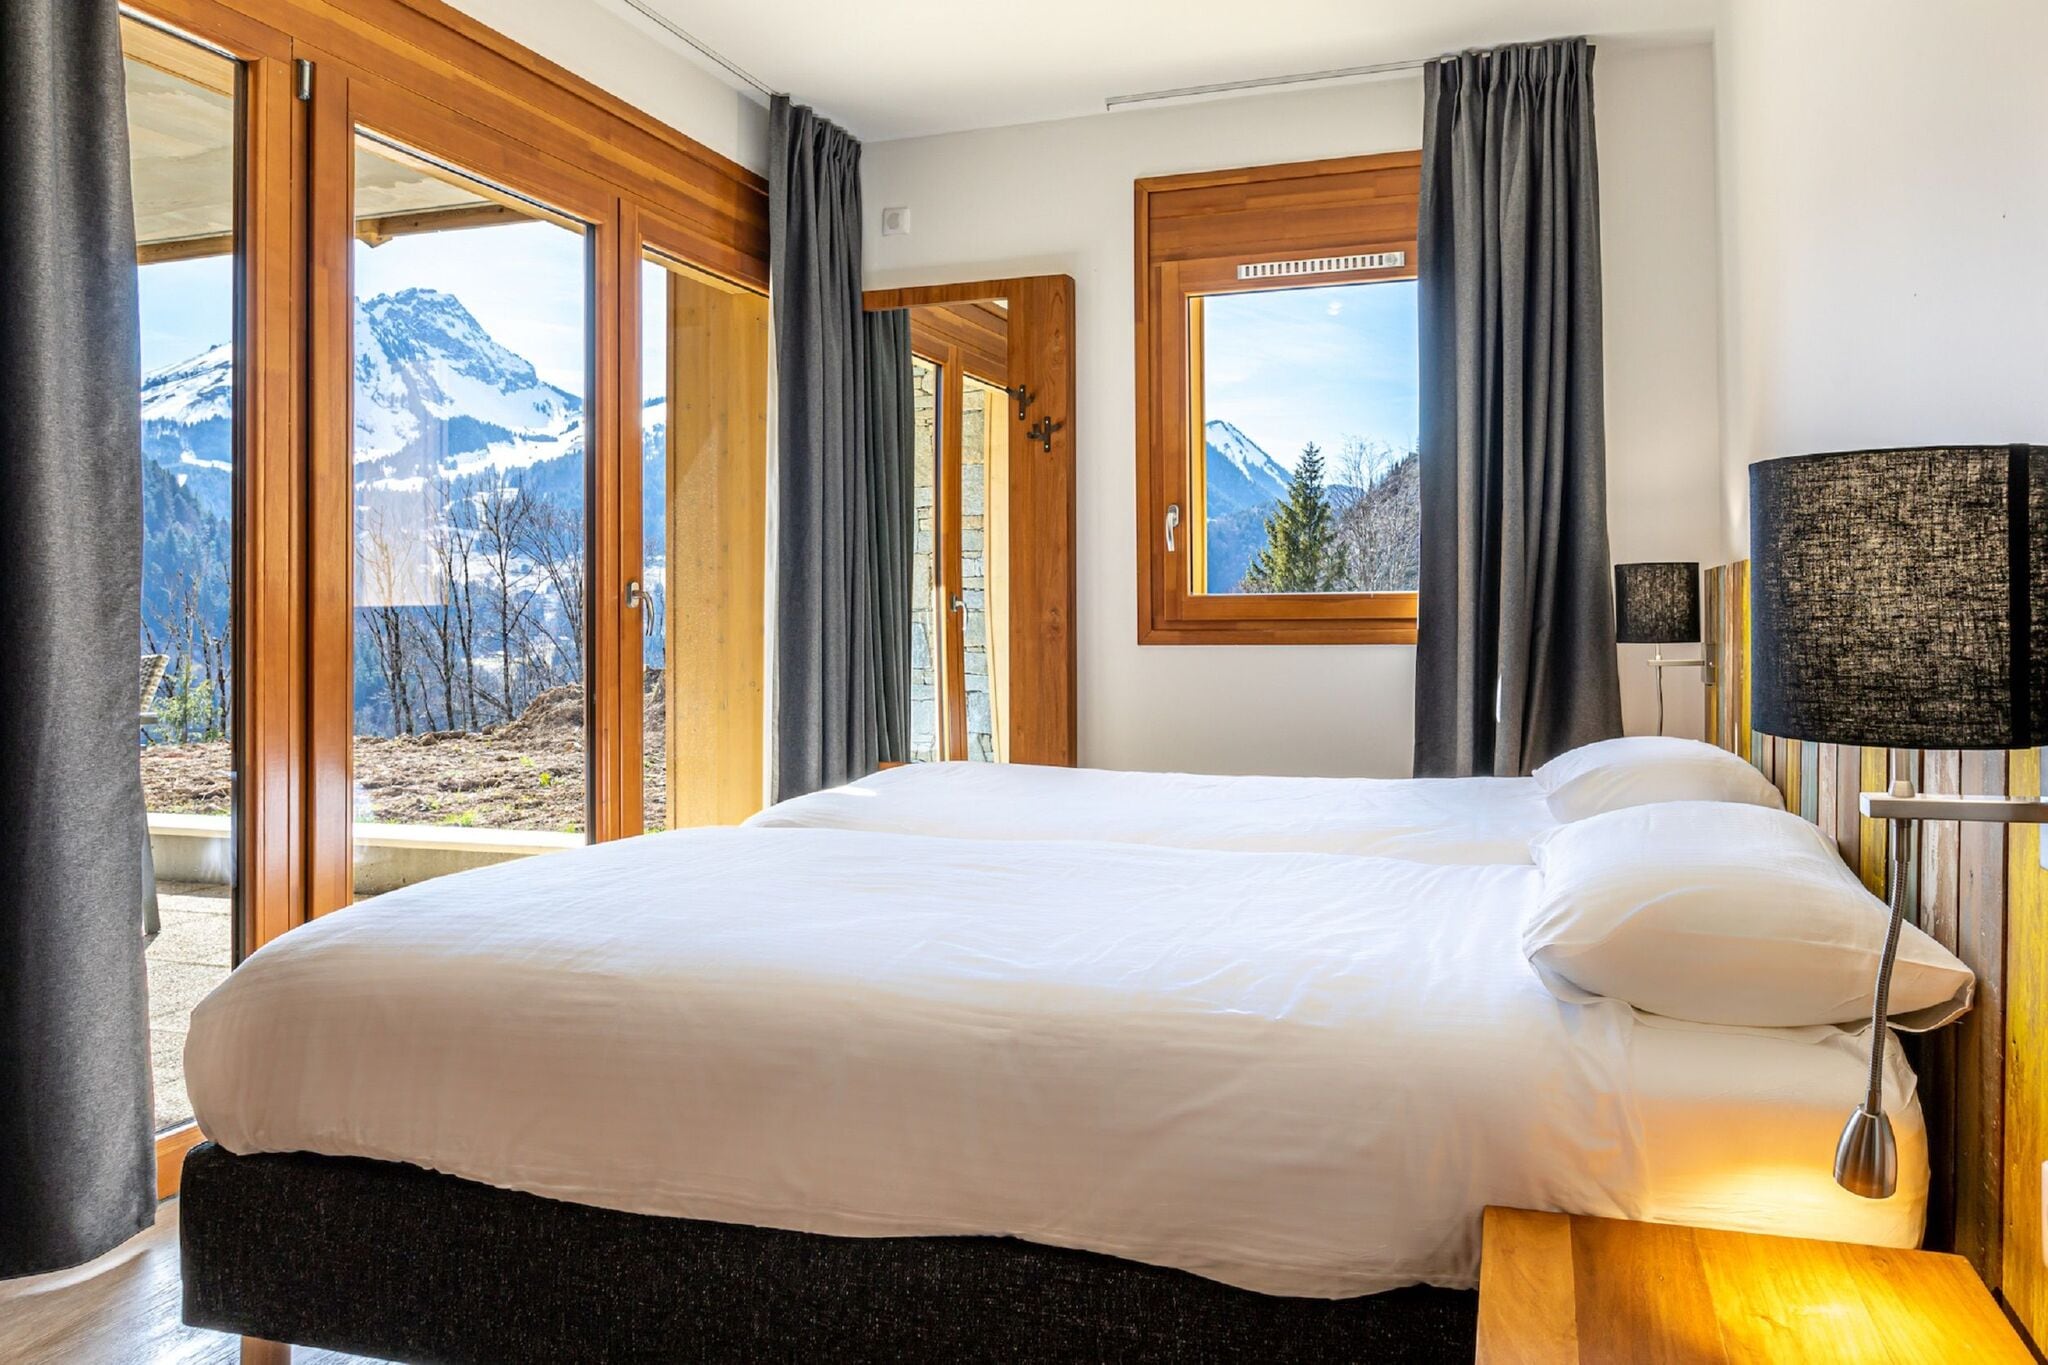 Luxurious apartment with Smart TV, ski lift 1.5 km away.